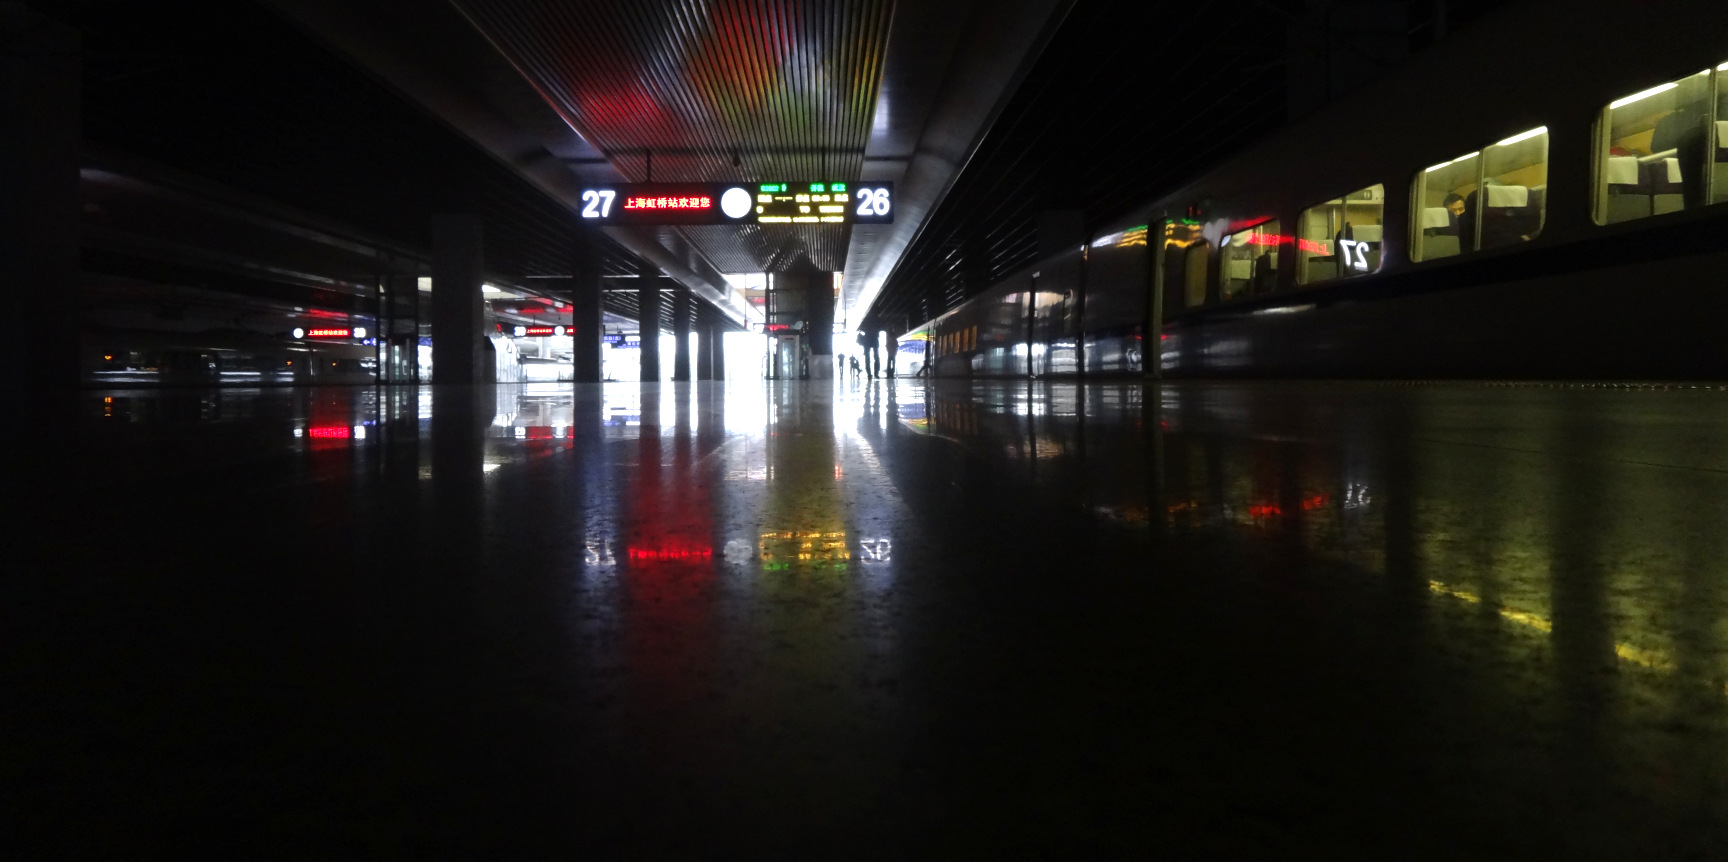 Vergrösserte Ansicht: Bahnhof Shanghai Hongqiao ( CC BY-NC-ND 4.0 / o-media )